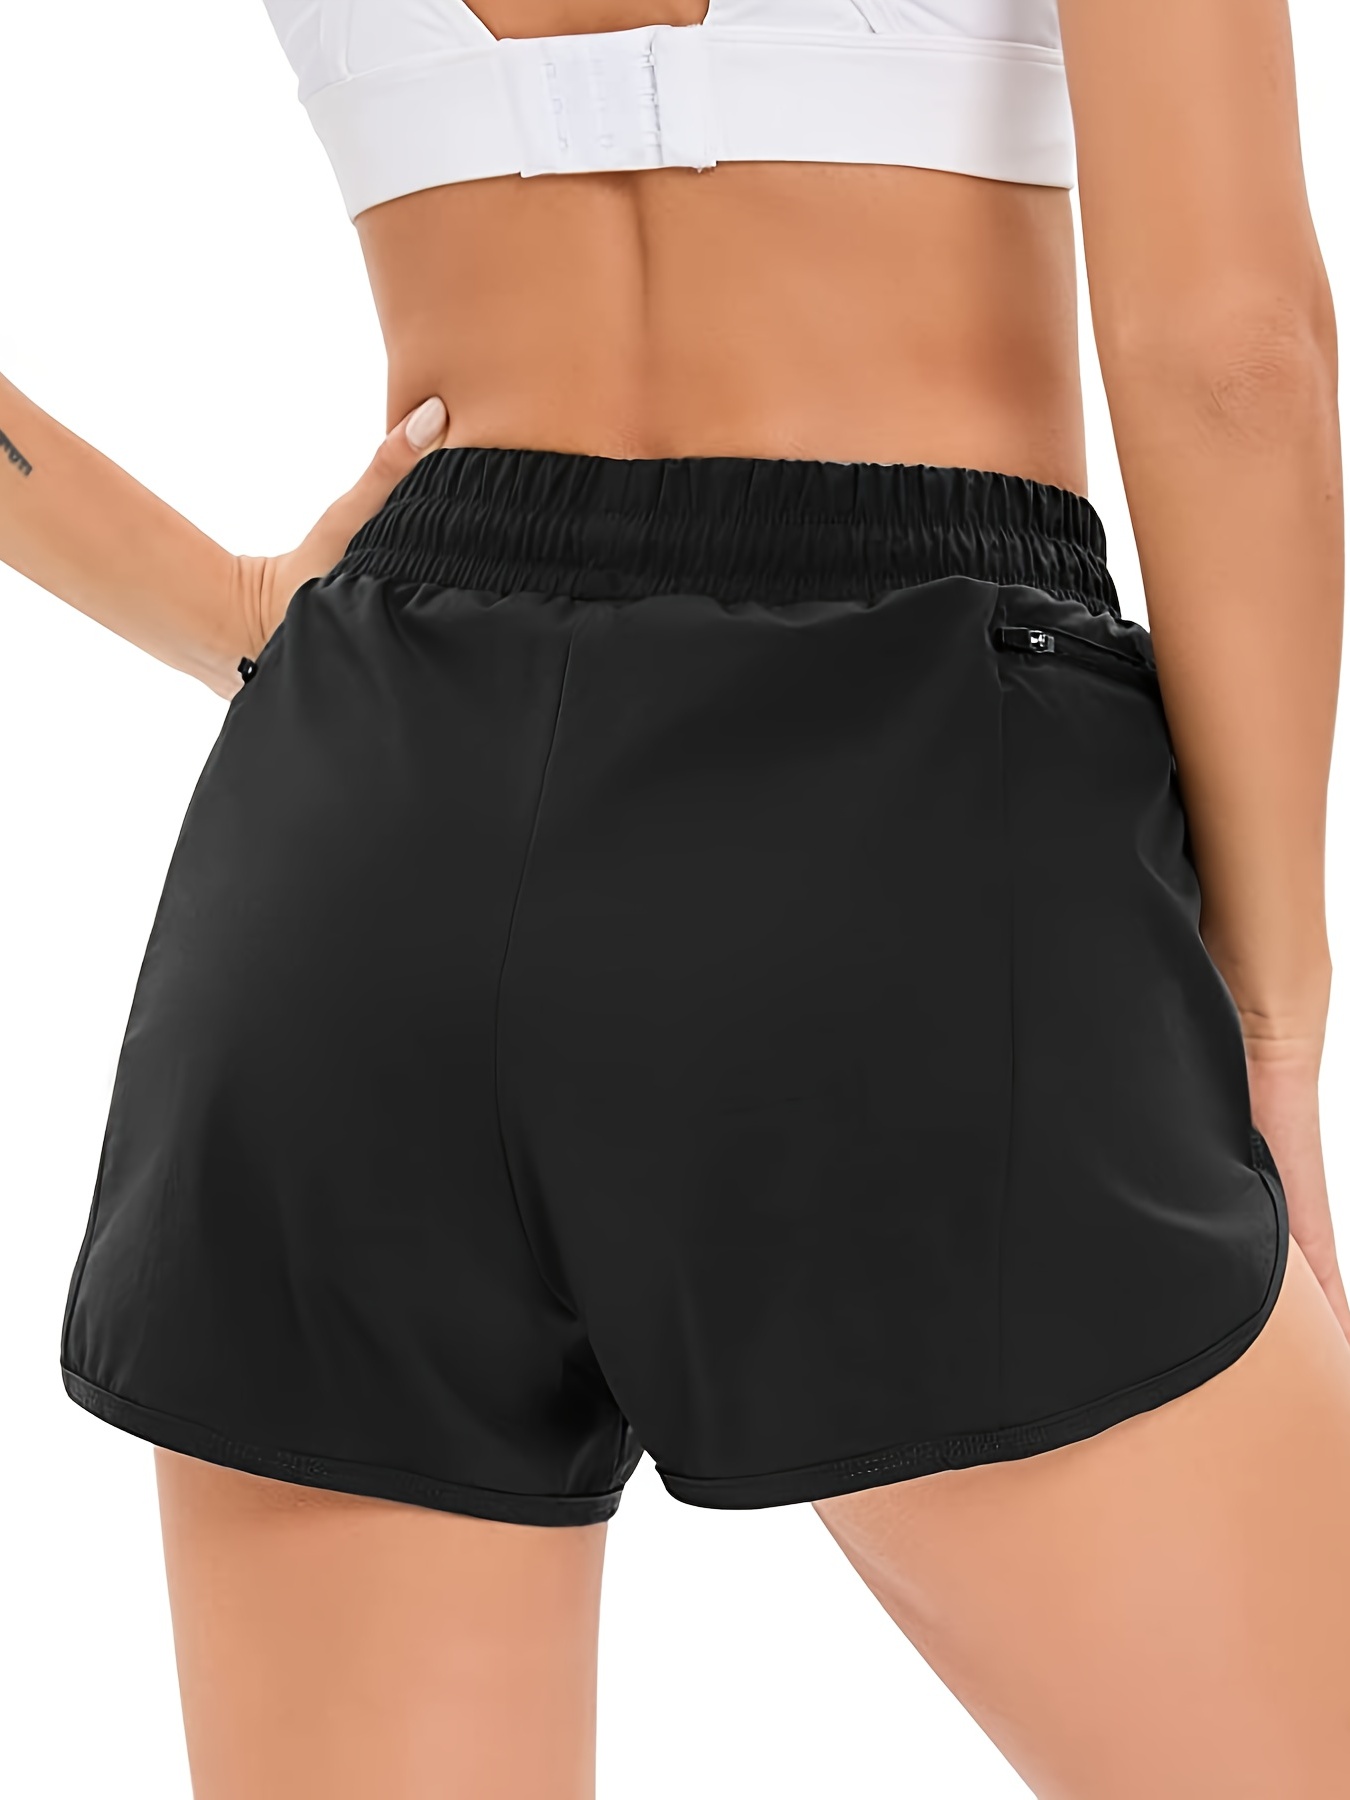 Black 2-in-1 Running Shorts, High Waist Side Zippered Pockets Outdoor  Sports Shorts, Women's Activewear